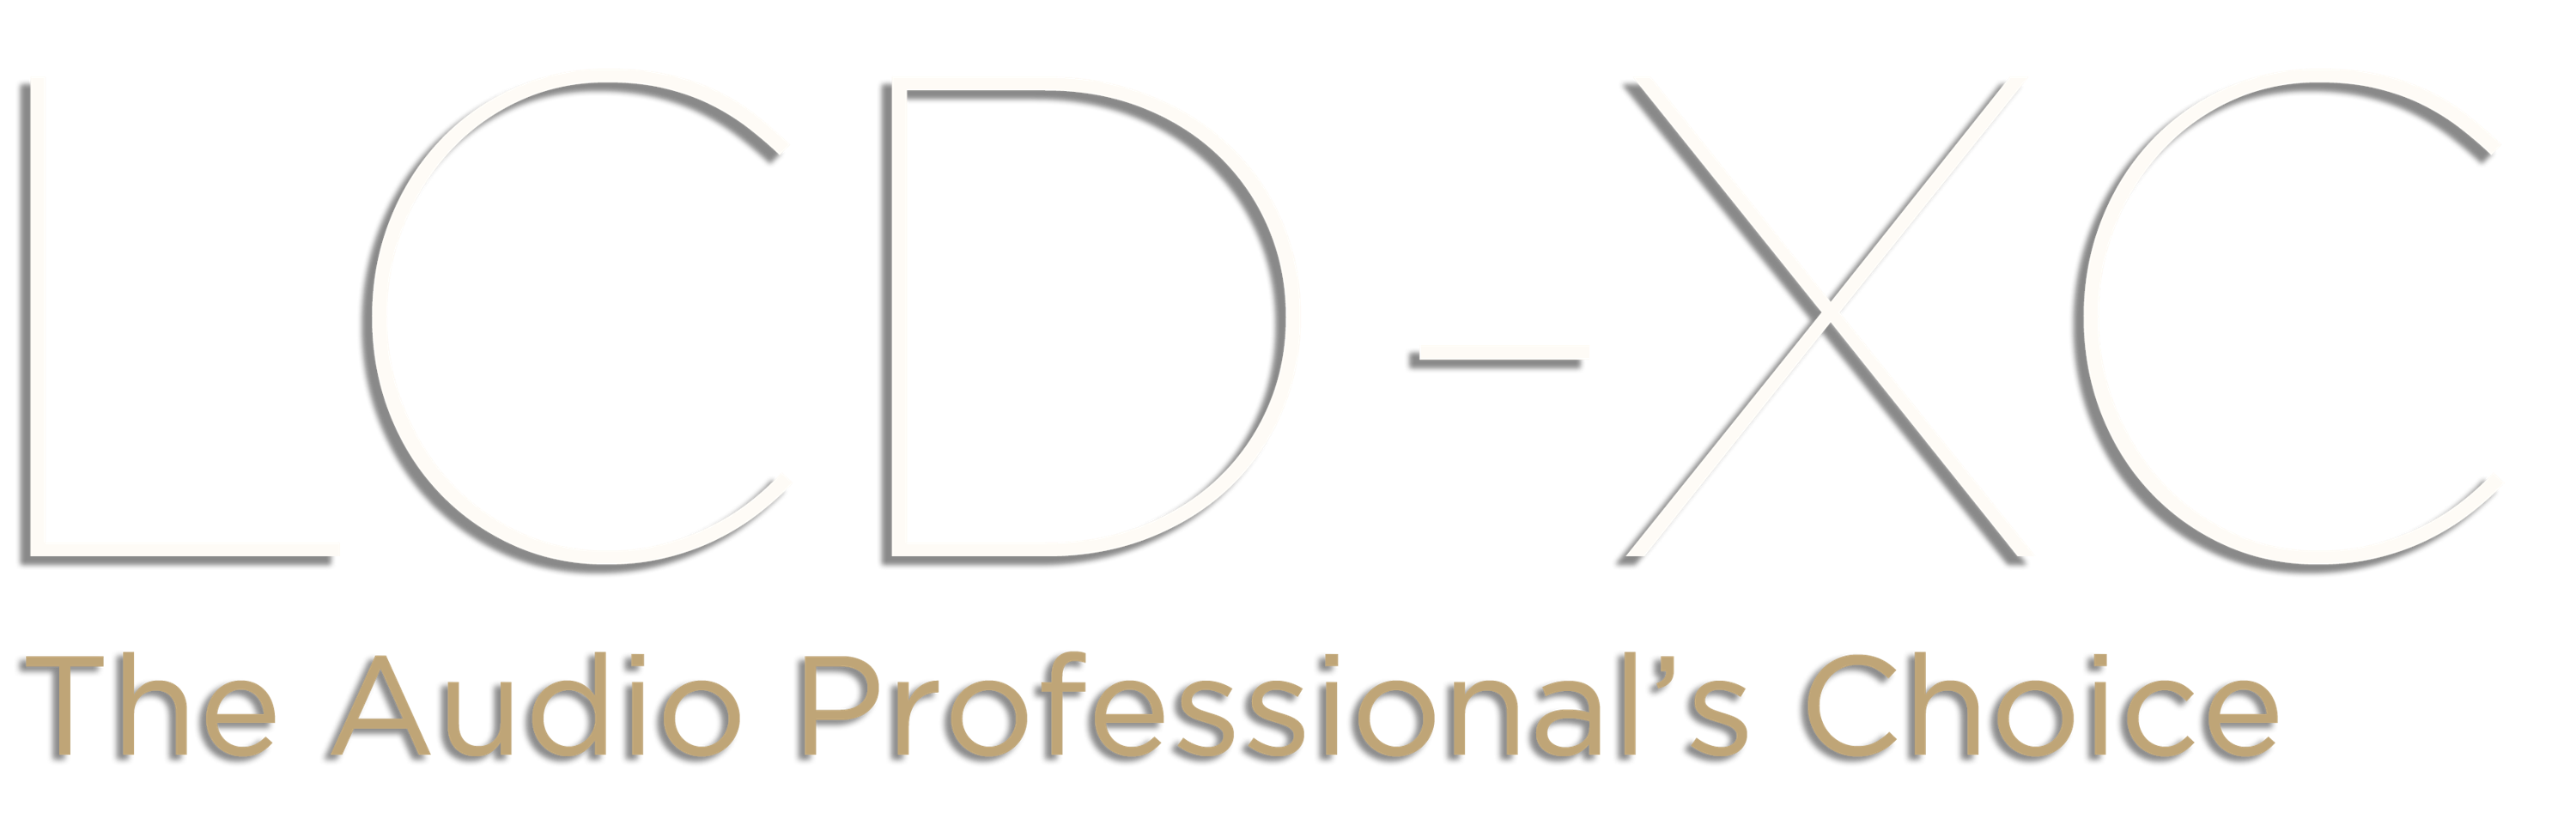 LCD-XC logo